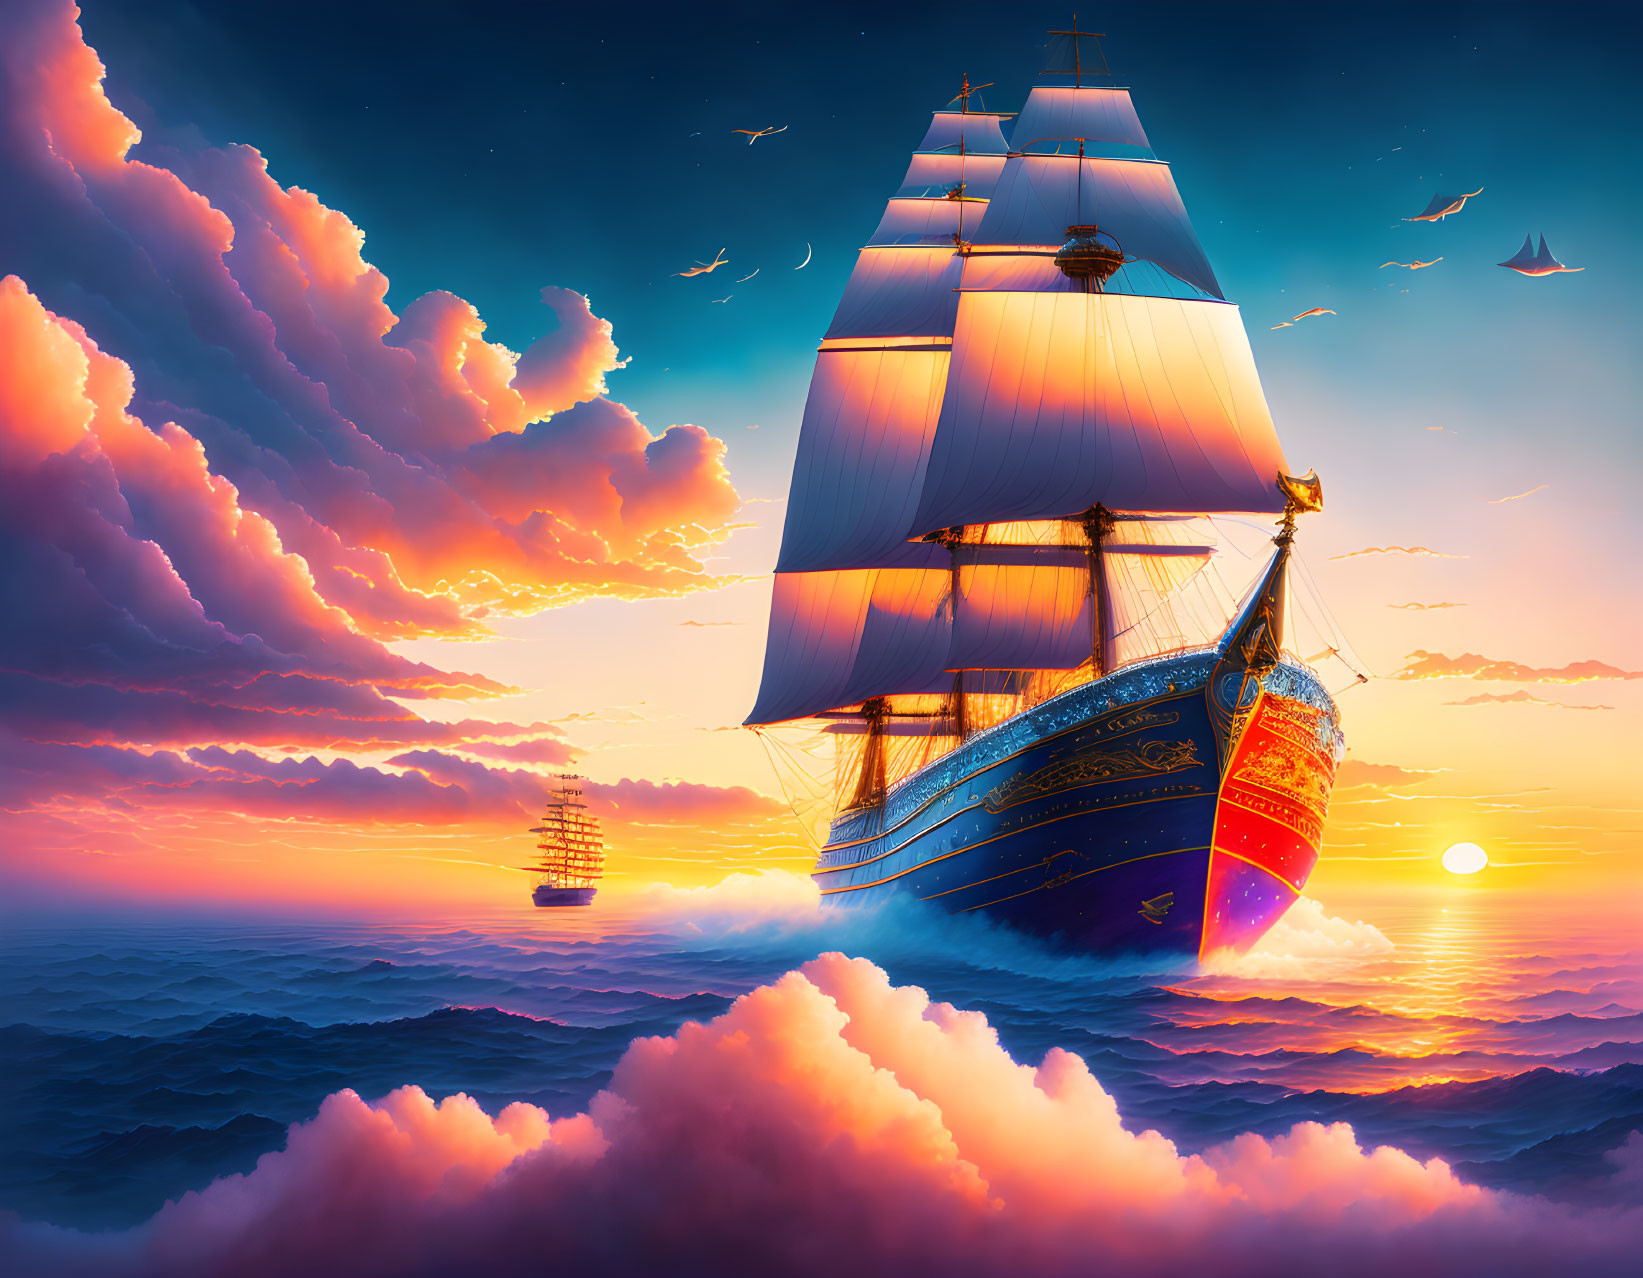 Sailing the sky